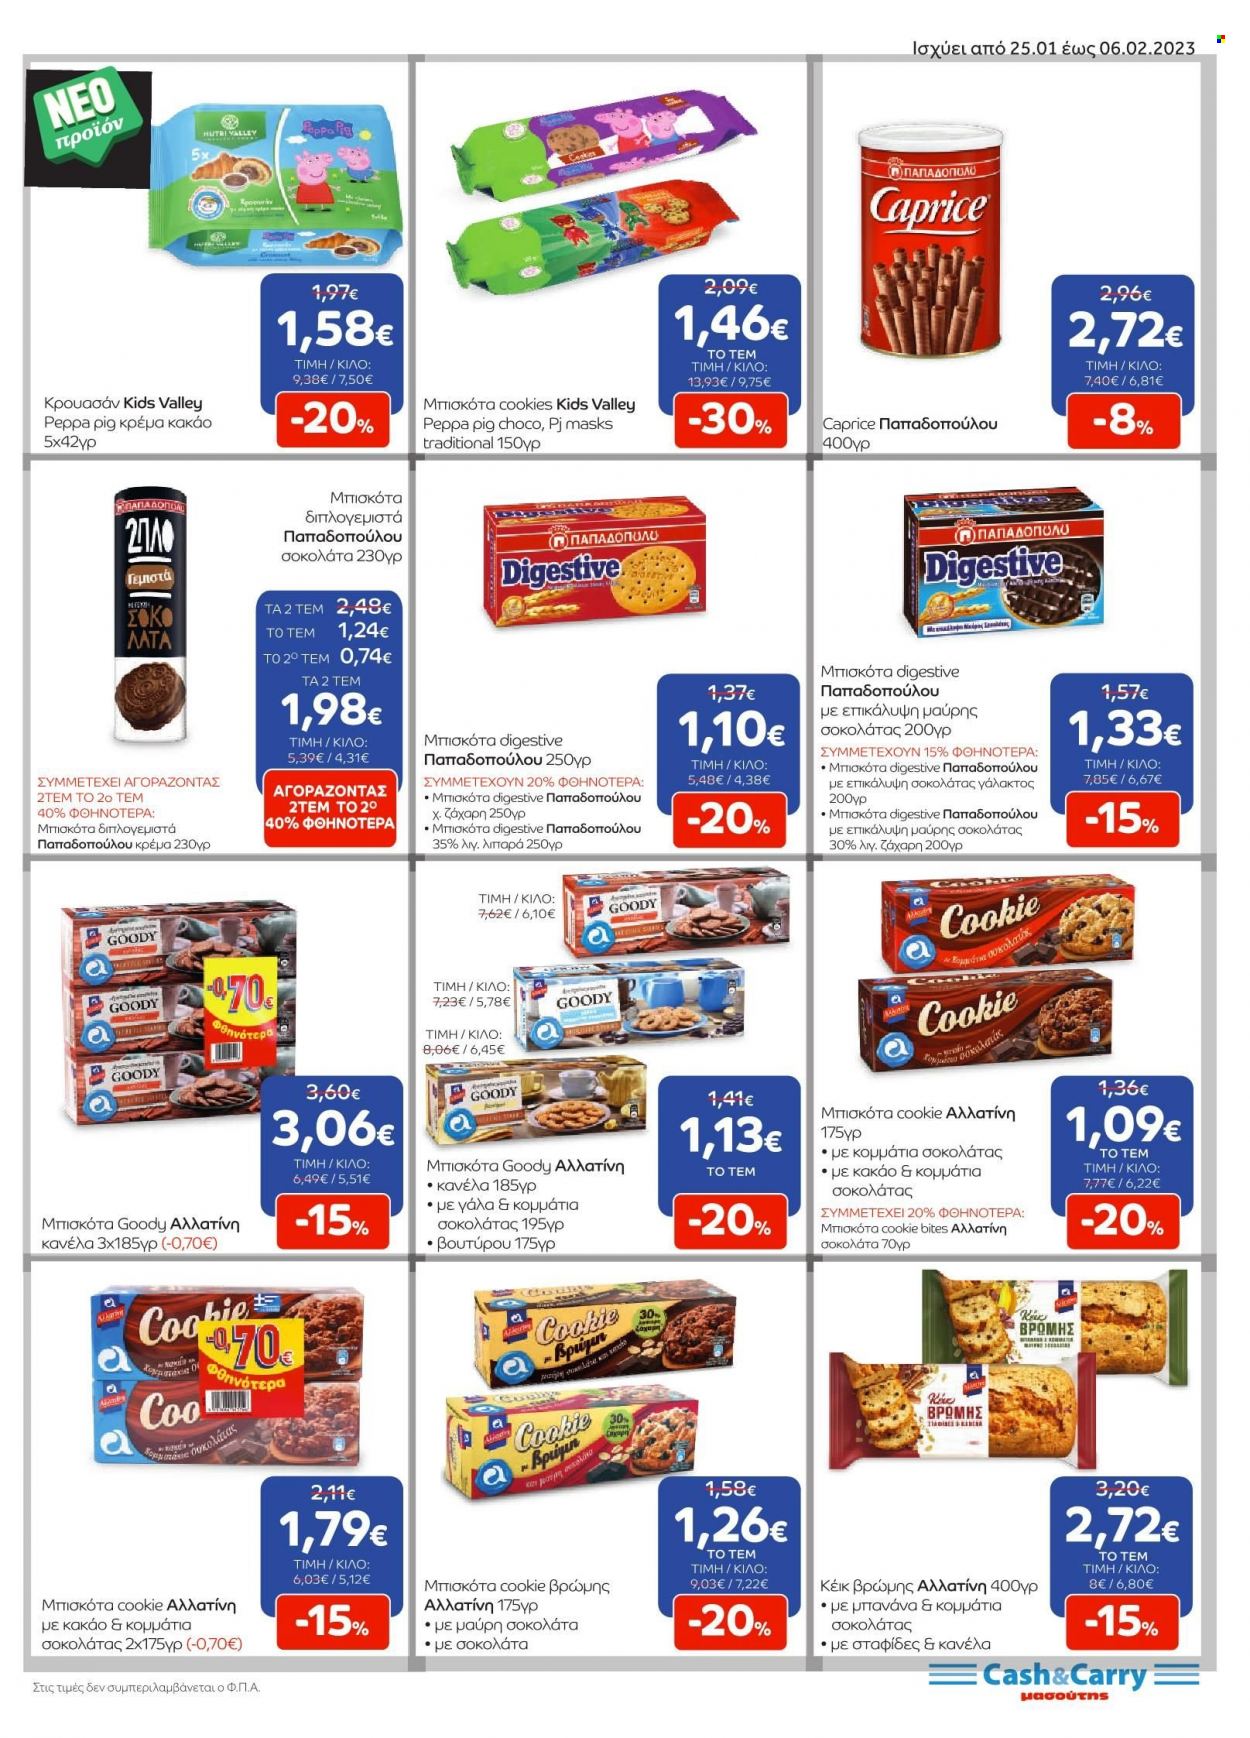 thumbnail - Φυλλάδια Masoutis Cash & Carry - 25.01.2023 - 06.02.2023 - Εκπτωτικά προϊόντα - κέικ, μπισκότα, cookies, ζάχαρη. Σελίδα 11.